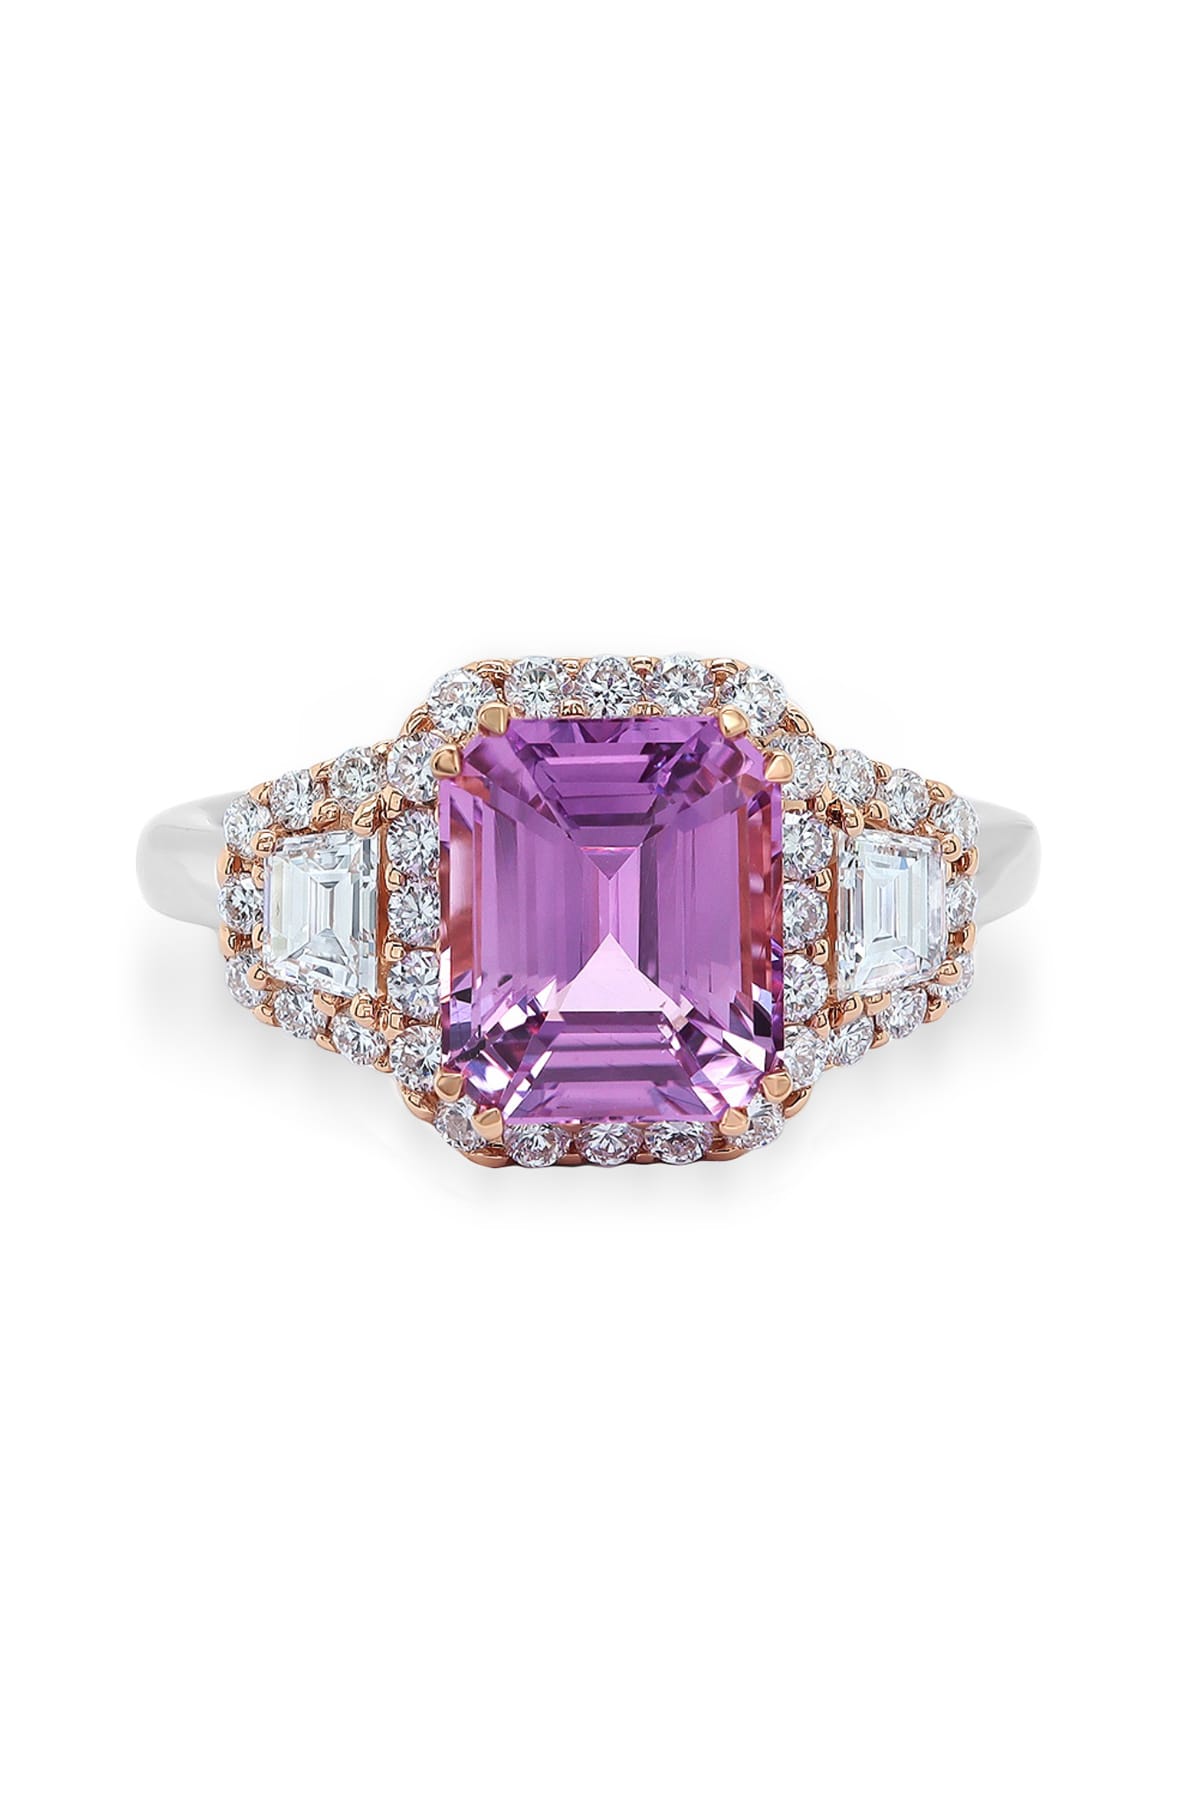 Emerald Cut Pink Sapphire and Diamond Ring at LeGassick Jewellers Gold Coast, Australia